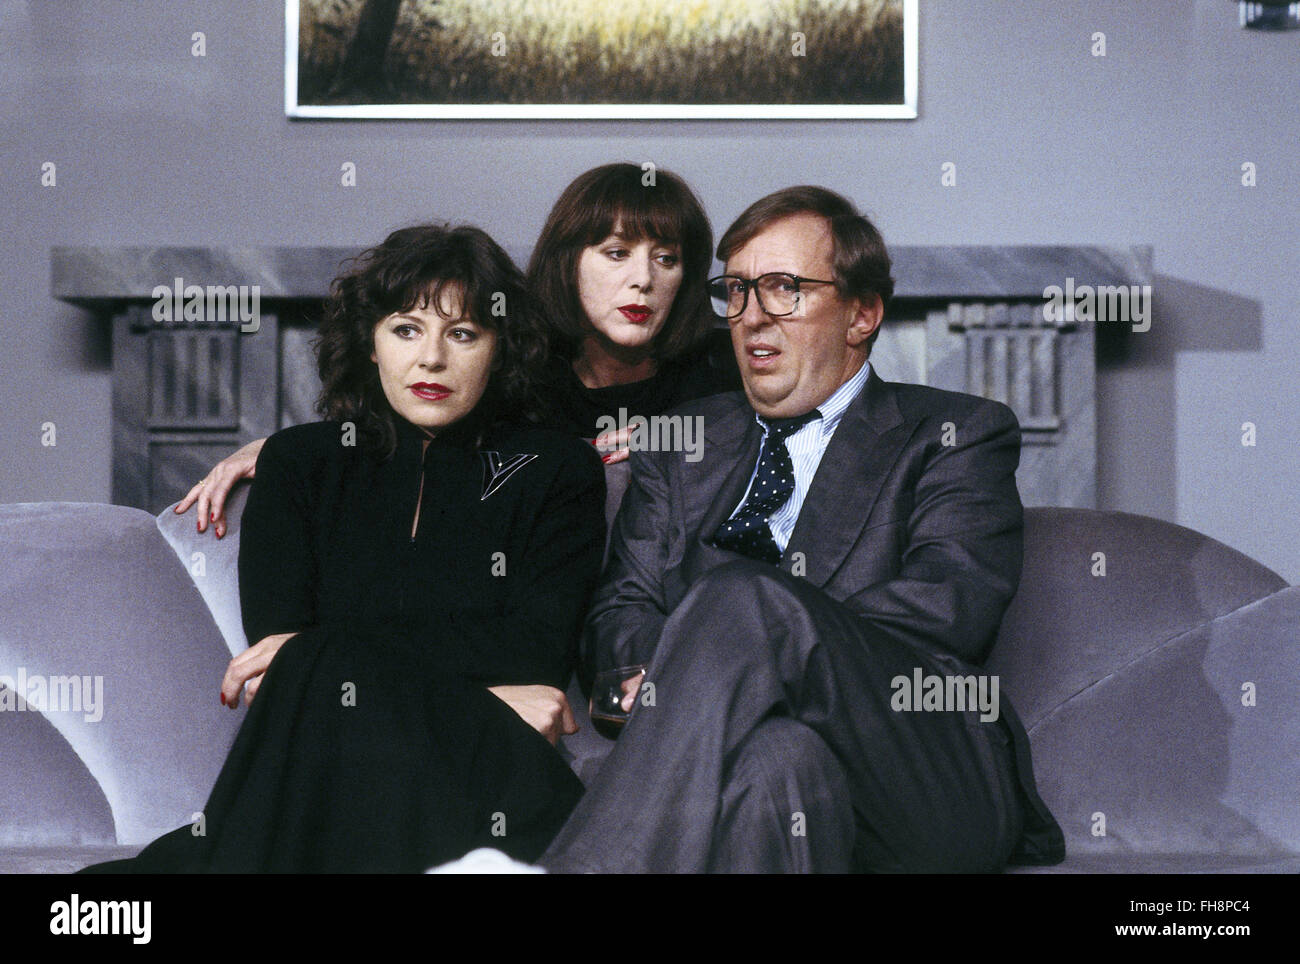 telecast, 'Old Times' (Alte Zeiten), DEU 1988, scene with: Gundi Ellert, Heidelinde Weis, Vadim Glowna, Third-Party-Permissions-Neccessary Stock Photo